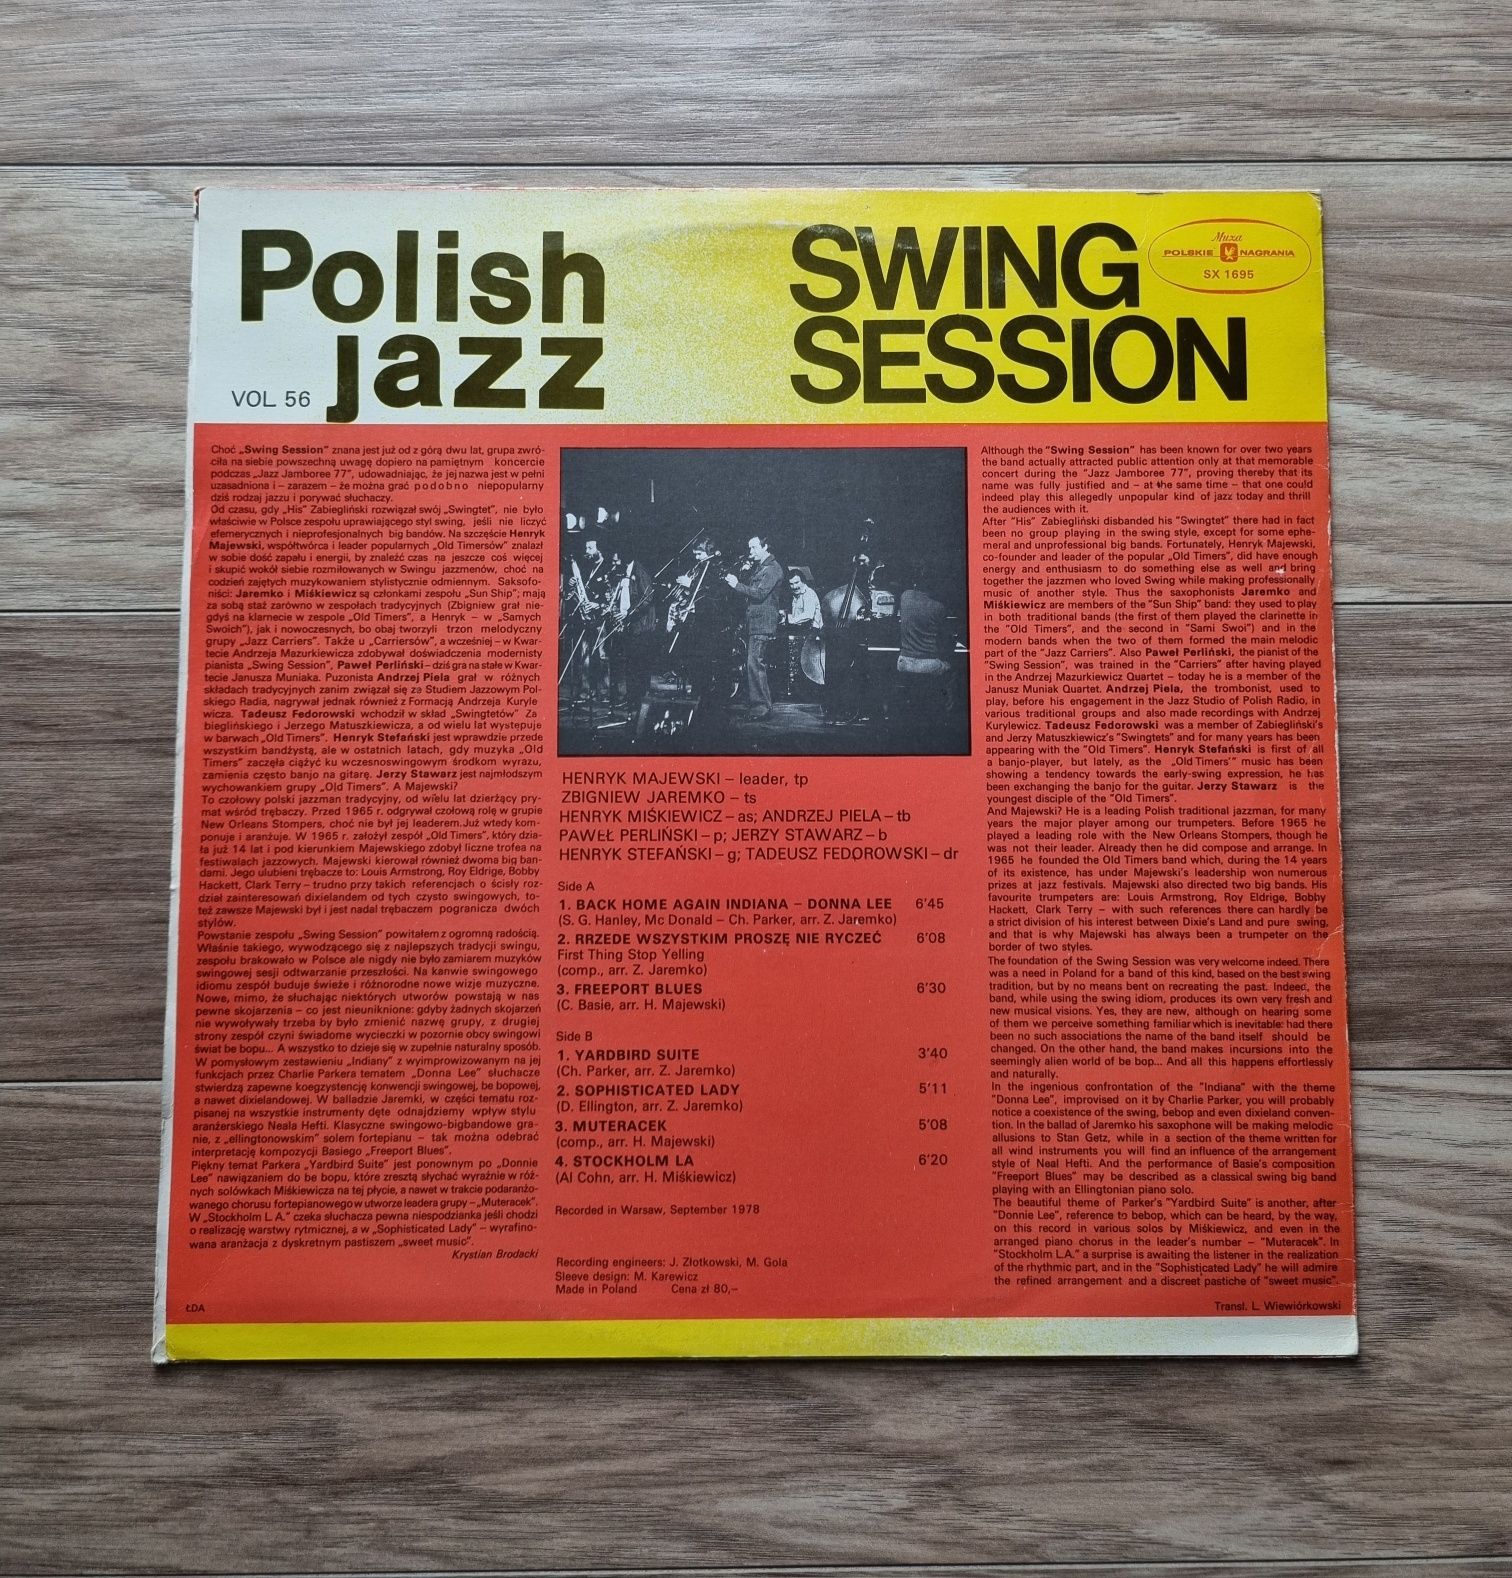 Polish Jazz vol. 56 Swing Session